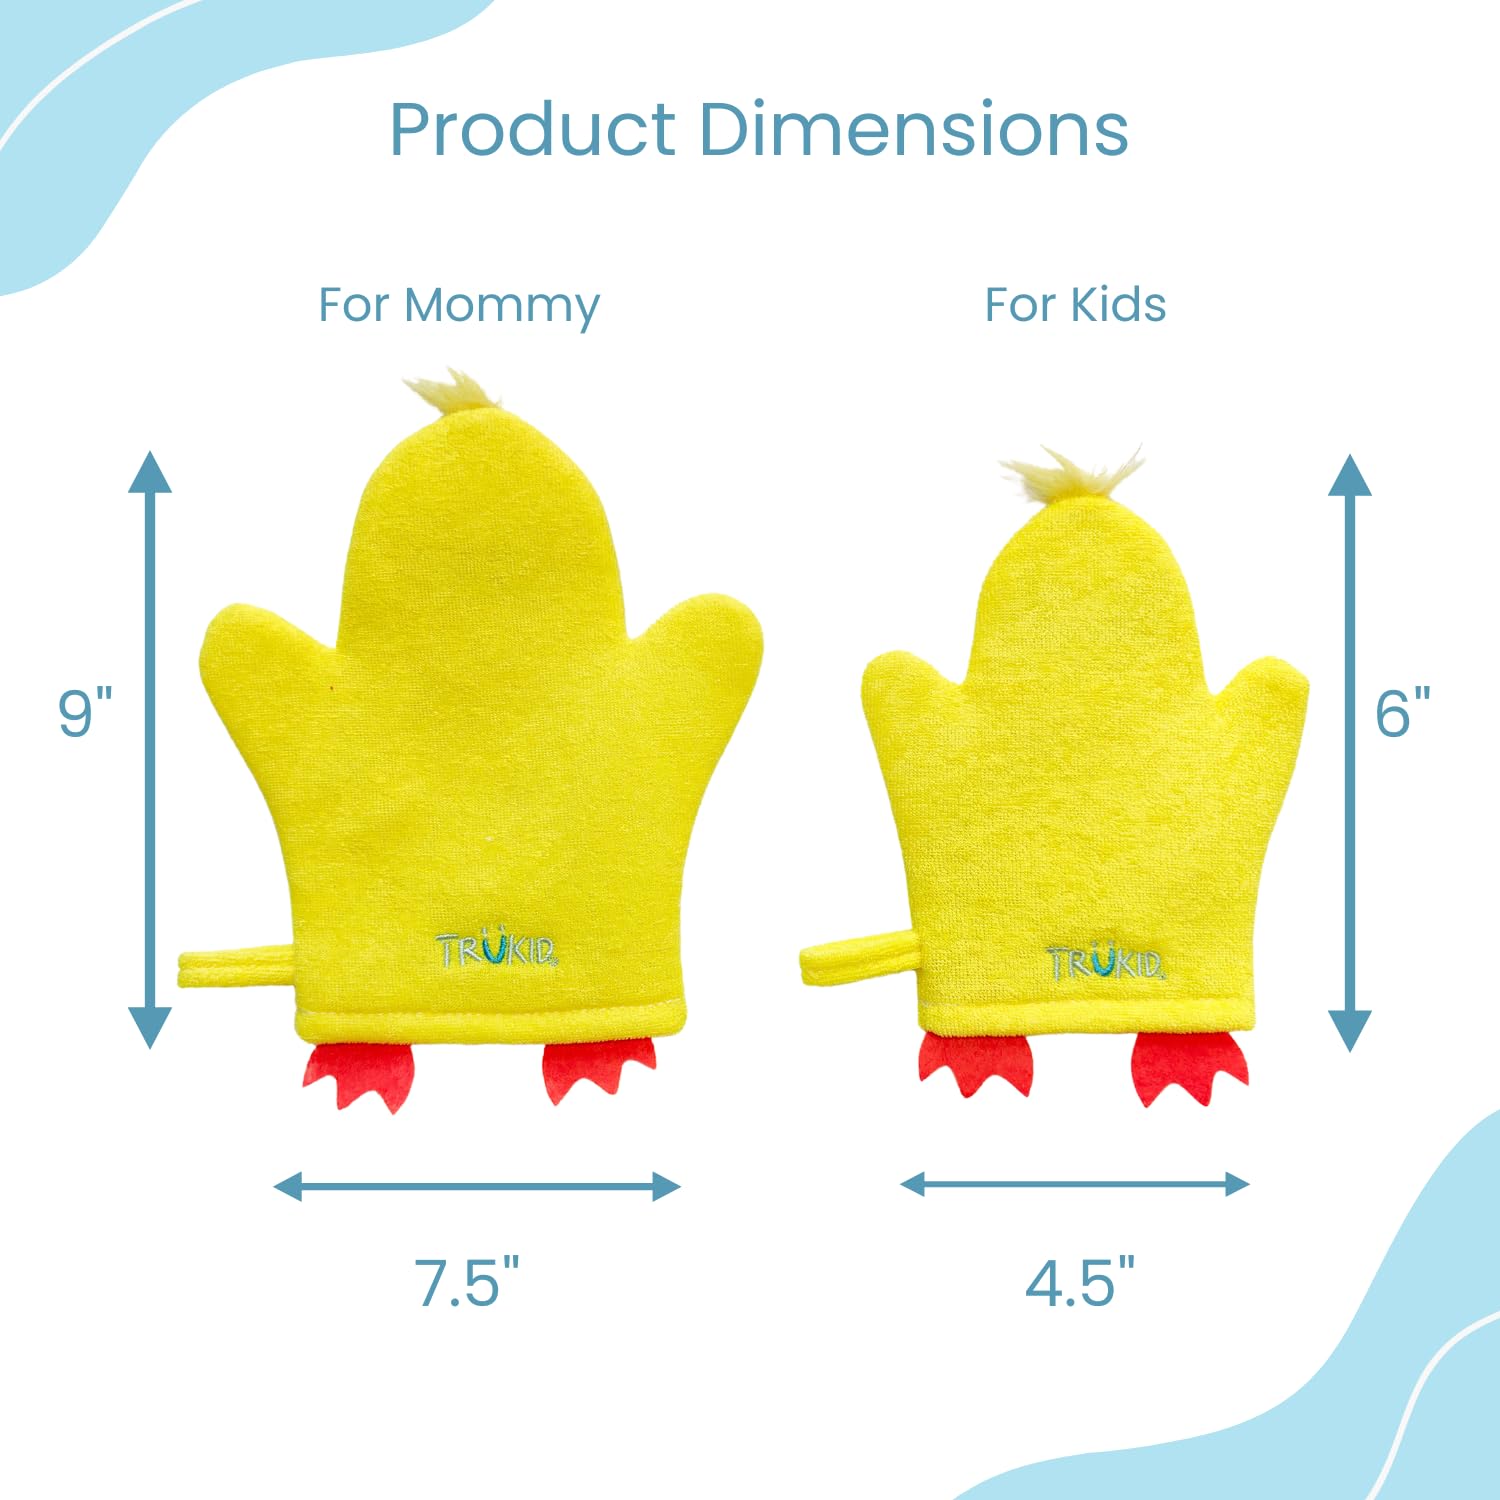 TruKid Bubble Podz & BubbleGlove Bundle - Includes 2-Set of Bath Wash Gloves for Parent & Child, Bubble Bath Pods Unscented 10ct, Baby Bath Essentials, Gentle for Sensitive Skin of Kids, Toddlers